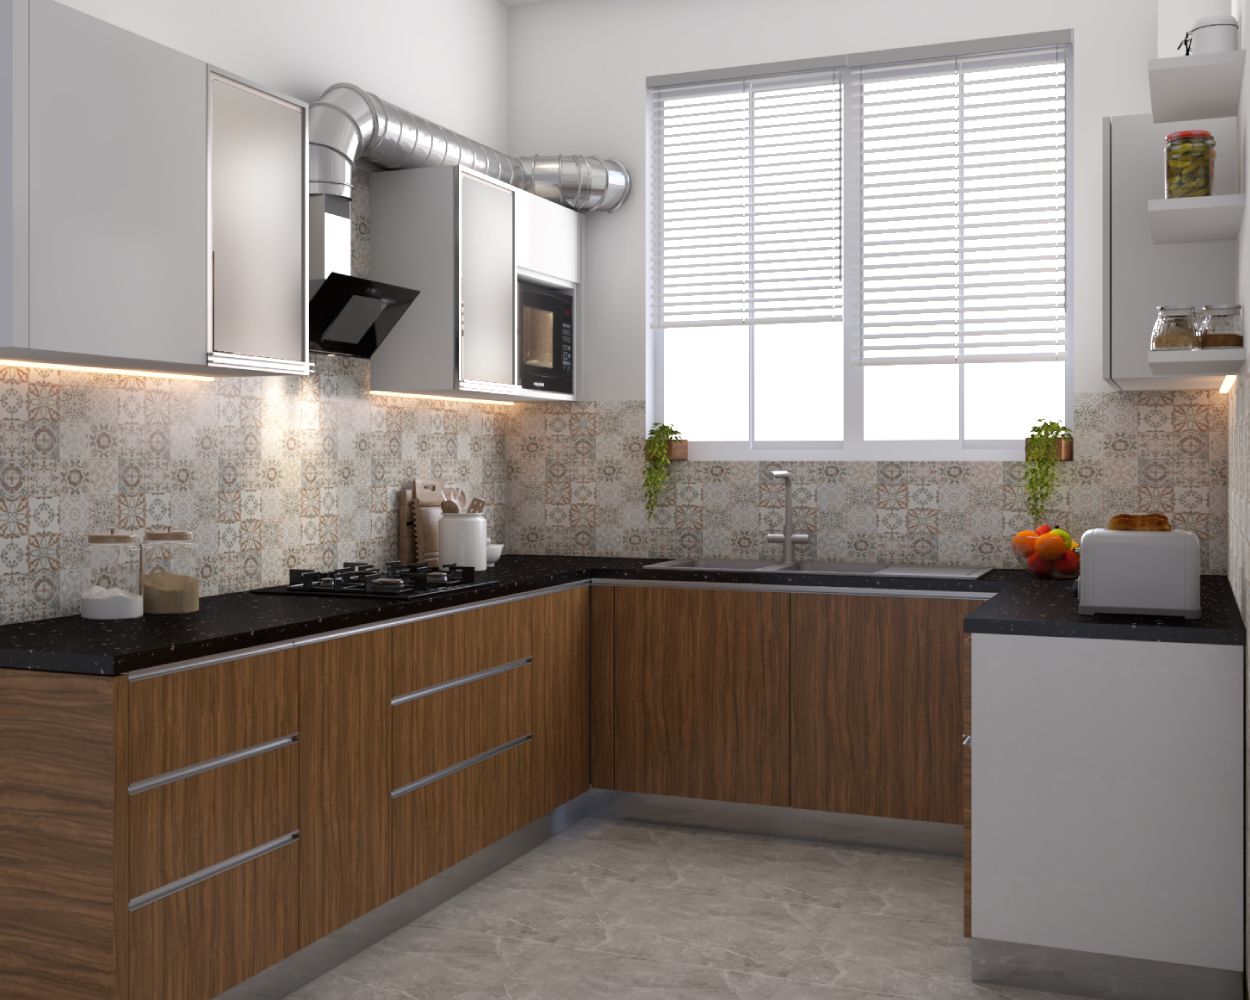 Modern White And Dark Wood U-Shaped Modular Kitchen Design With Beige Patterned Backsplash